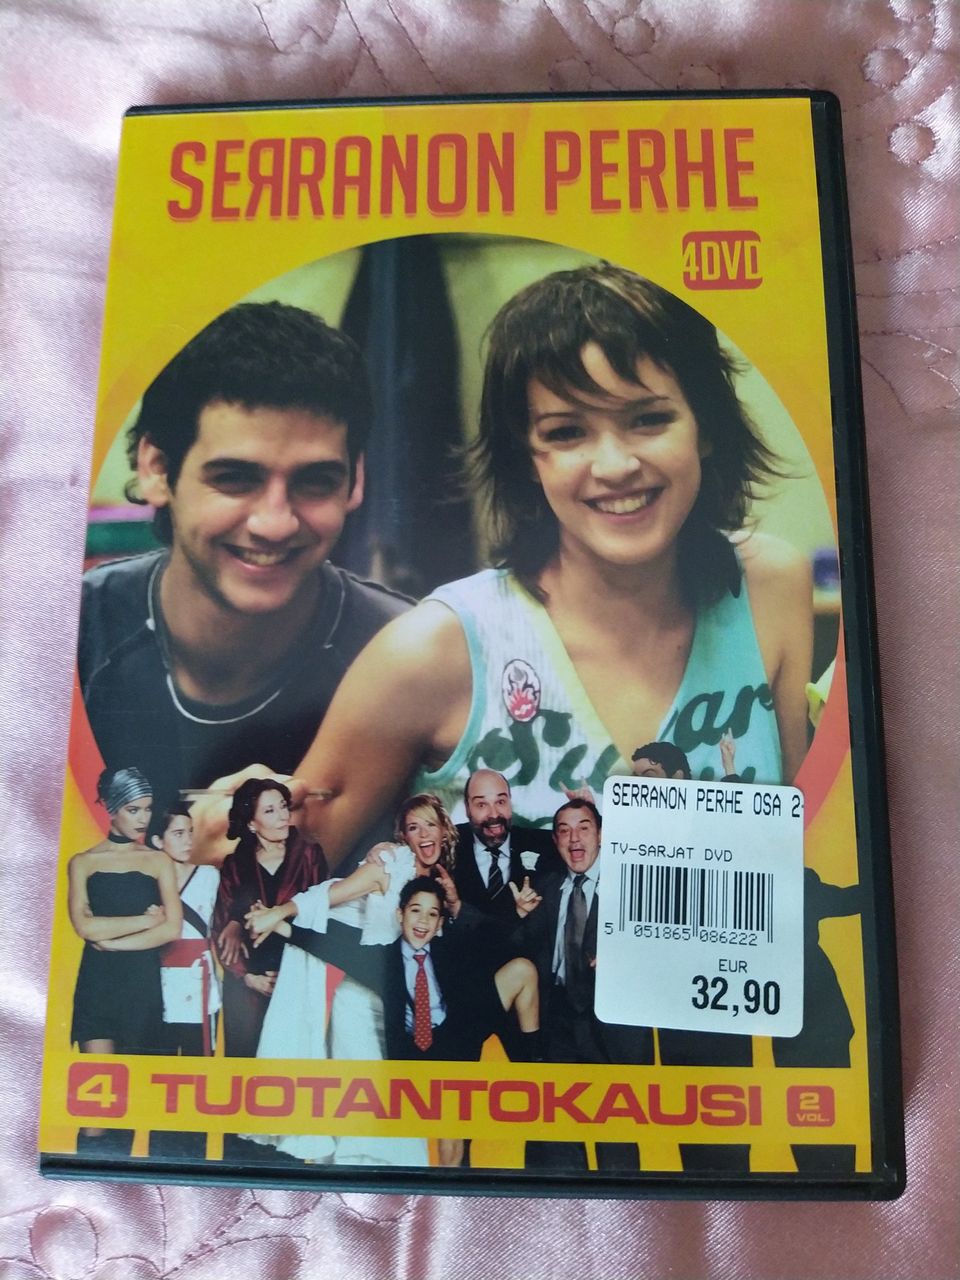 Serranon perhe dvd